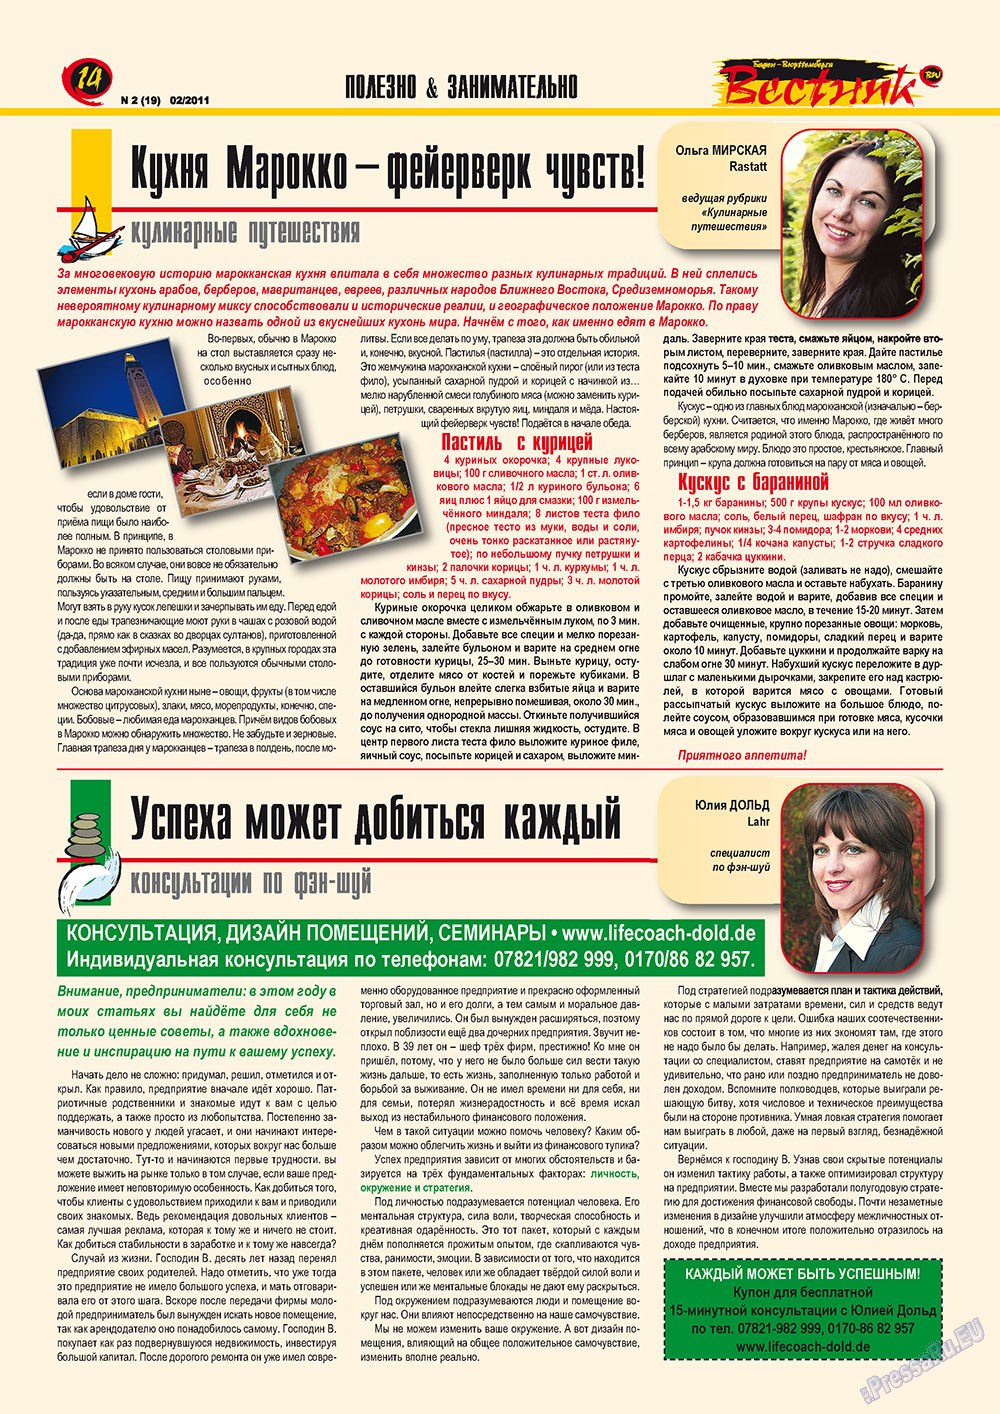 Вестник-info (журнал). 2011 год, номер 2, стр. 14